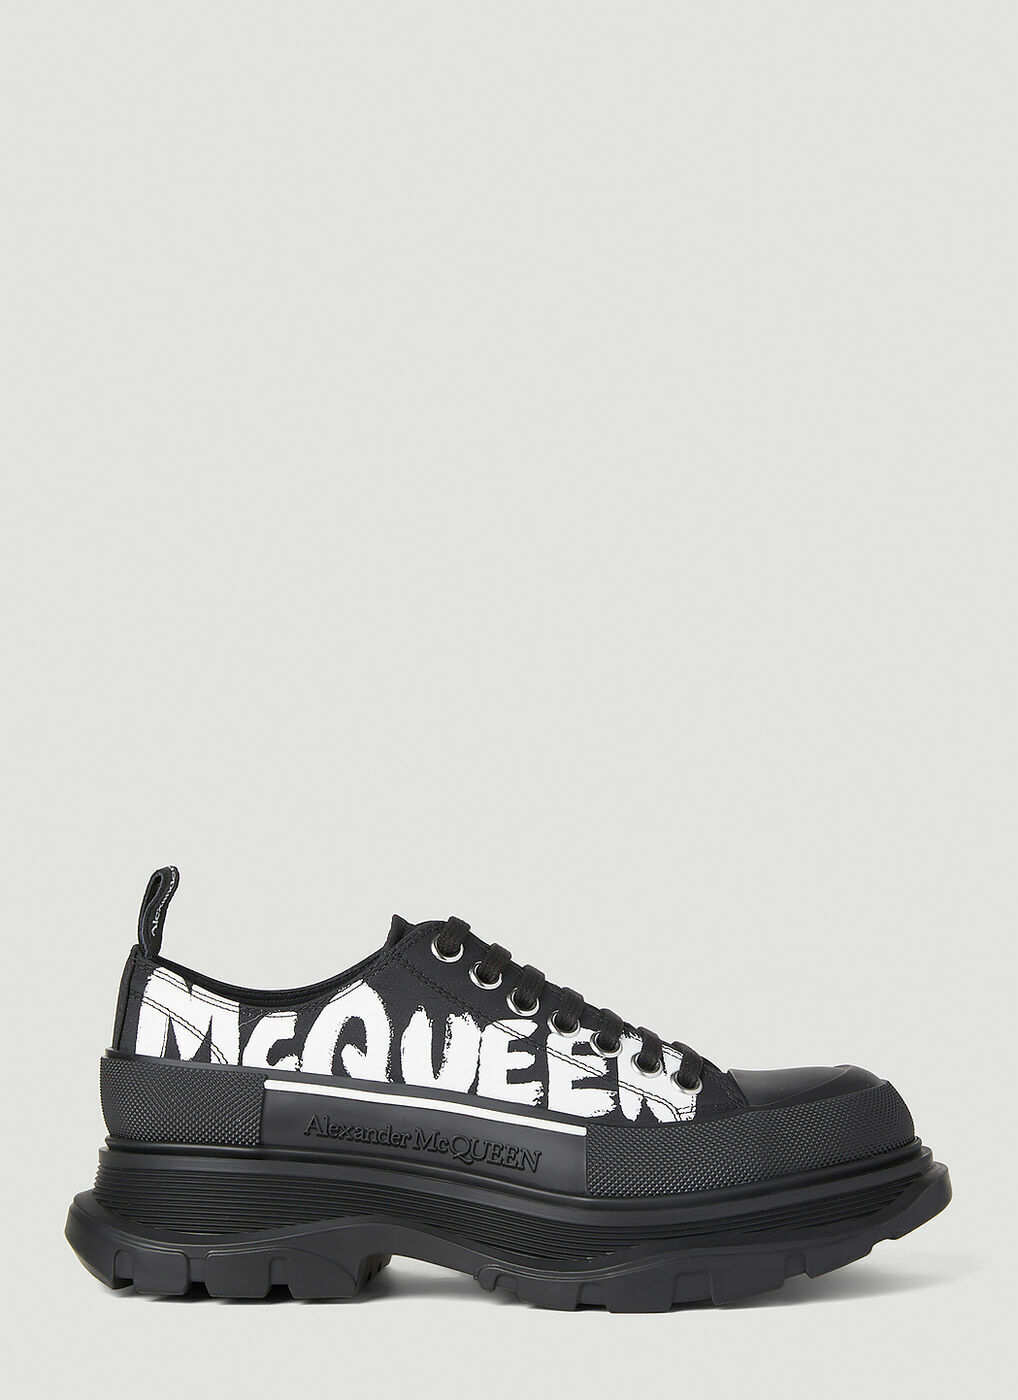 Alexander McQueen - Graffiti Tread Slick Sneakers in Black Alexander ...